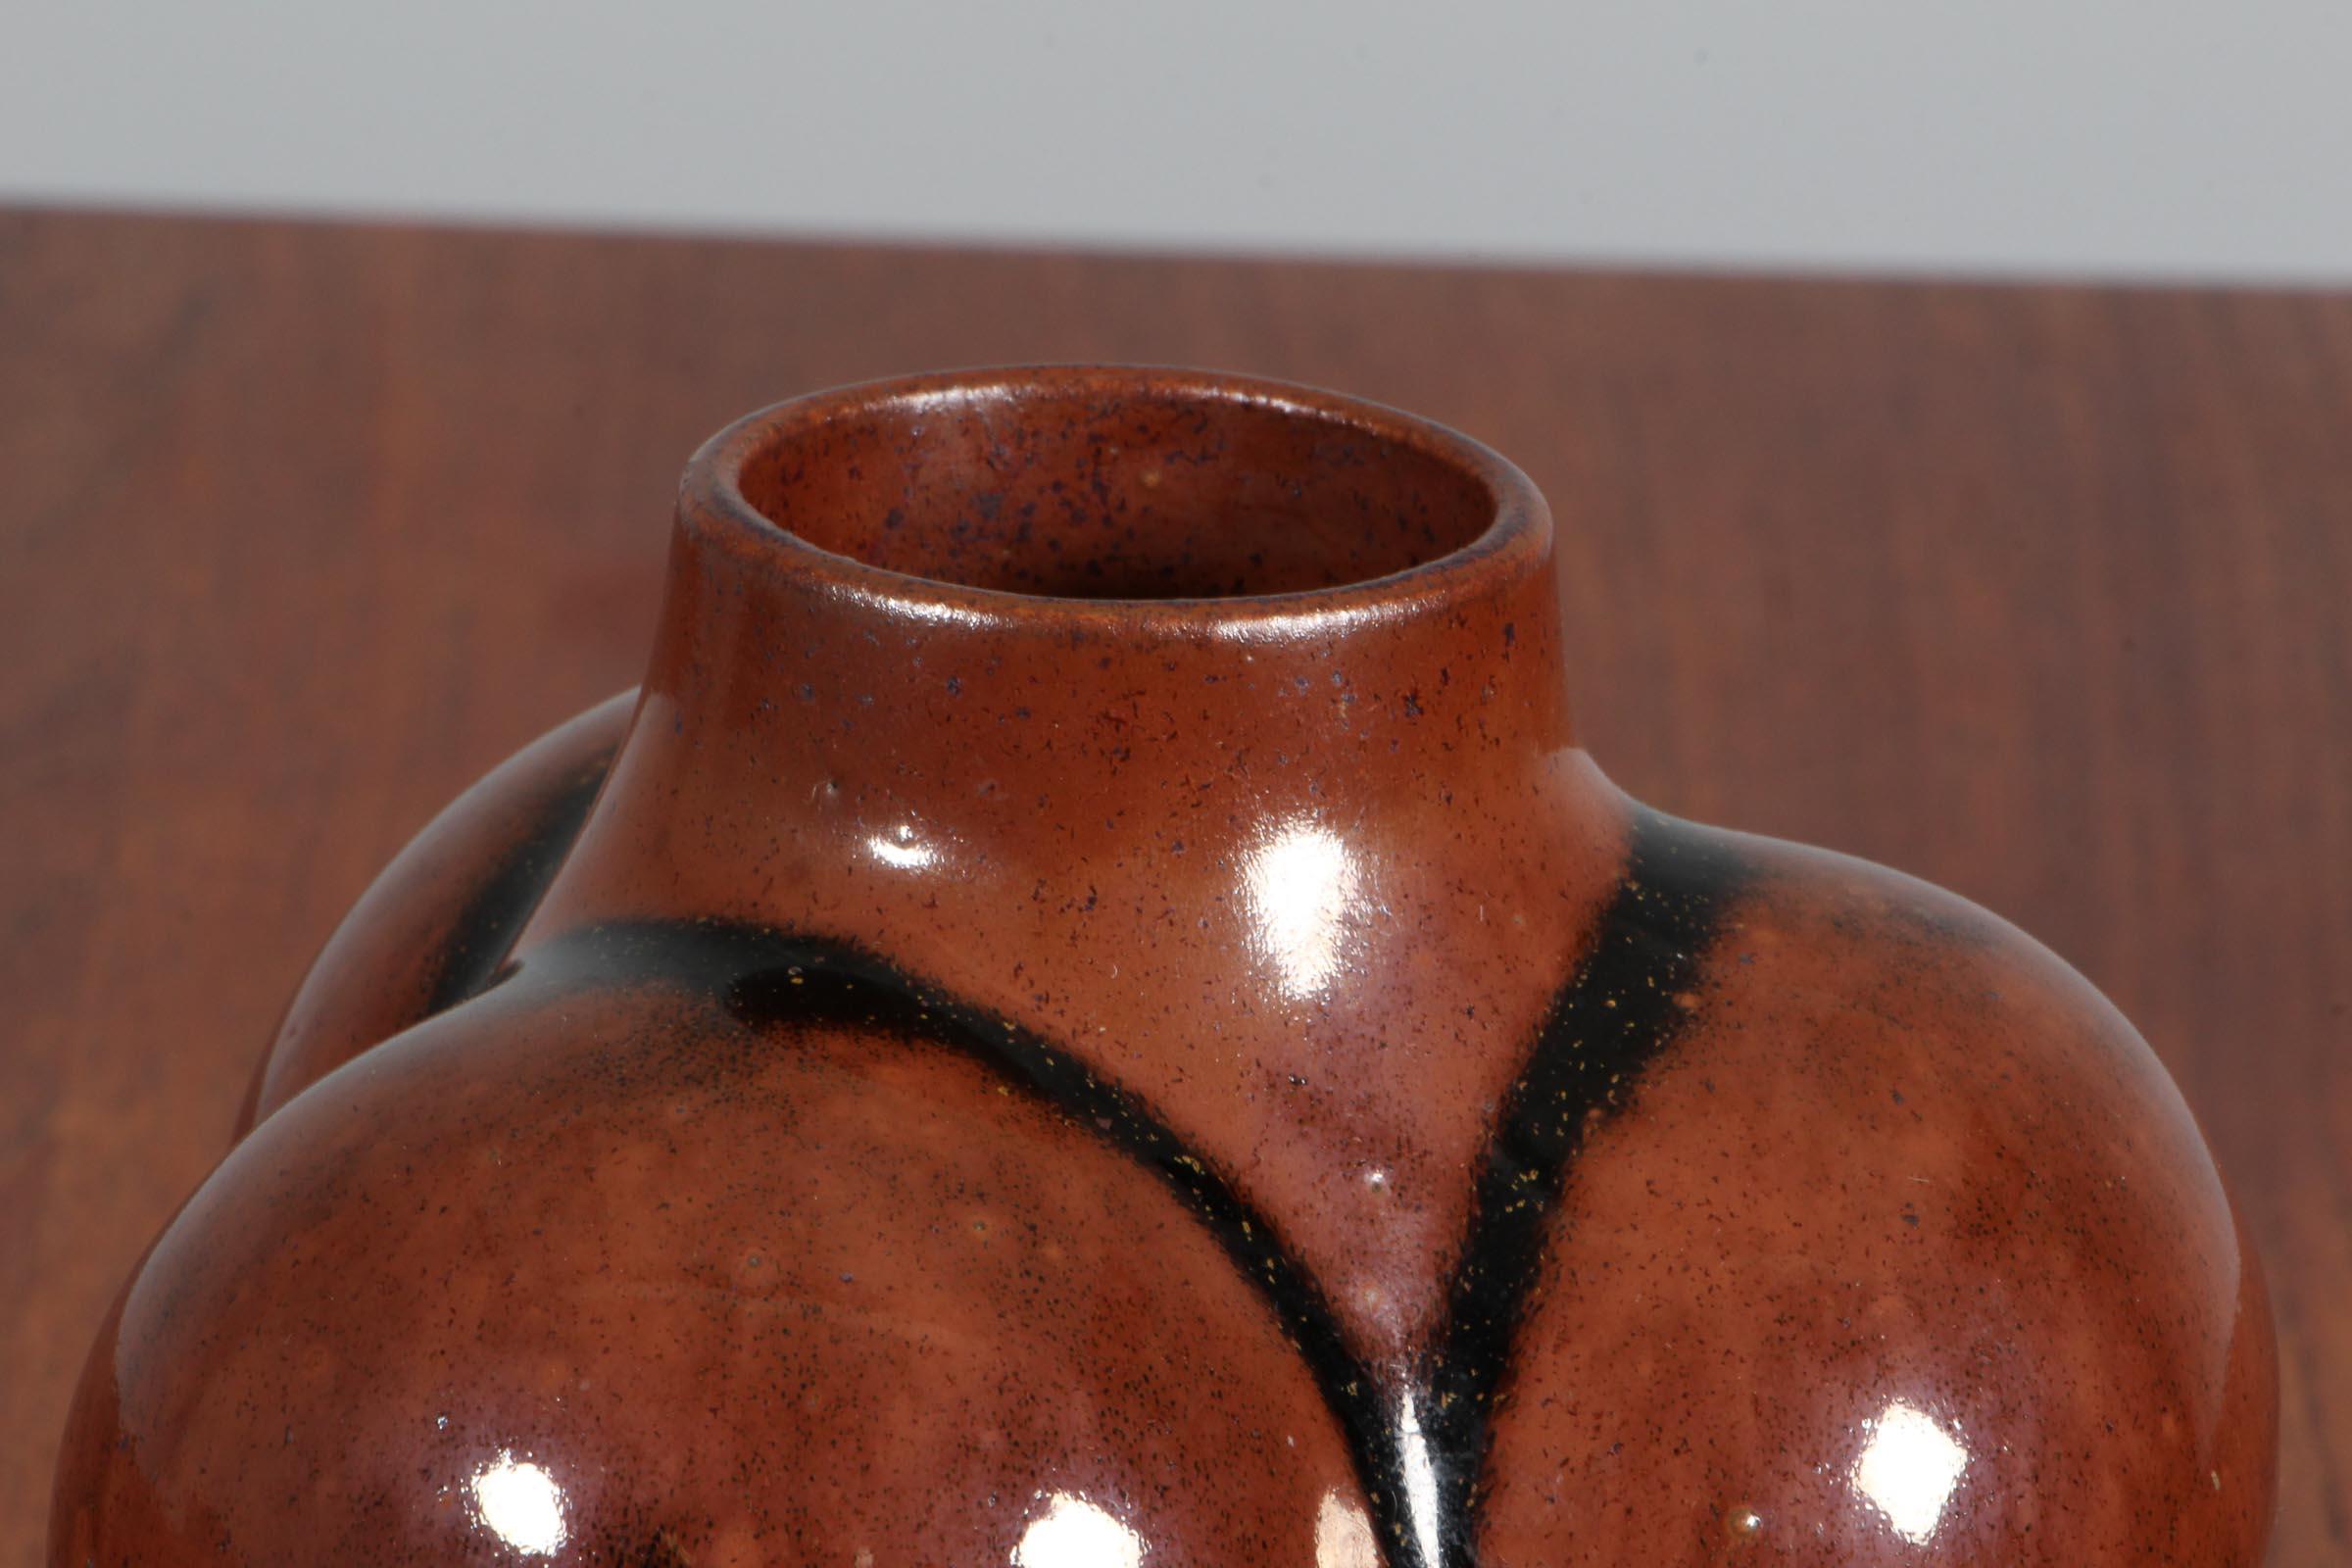 Tue Poulsen for Knabstrup, vase of glazed ceramics.